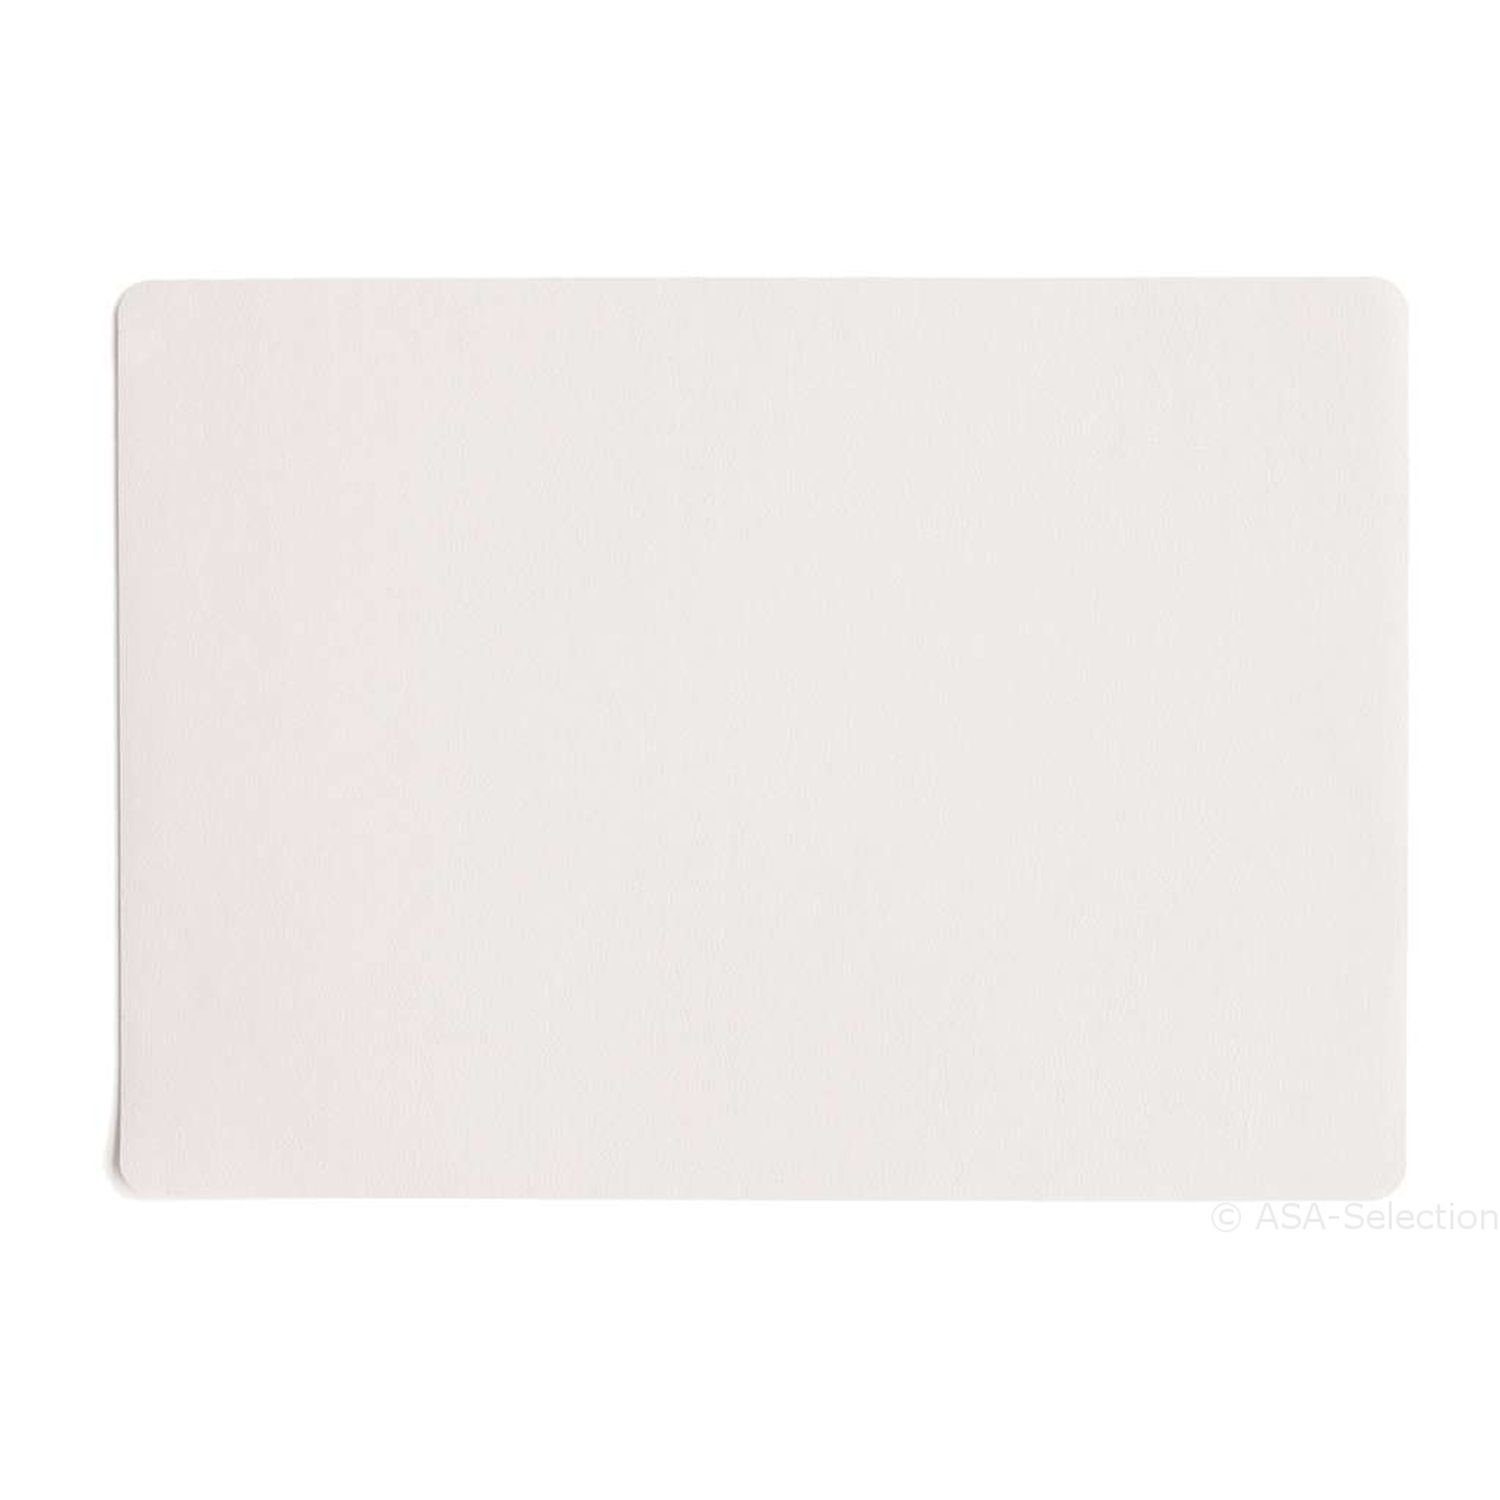 Optic SELECTION, Leather ASA Weiß x 46 cm, Platzset, 33 (6-St)